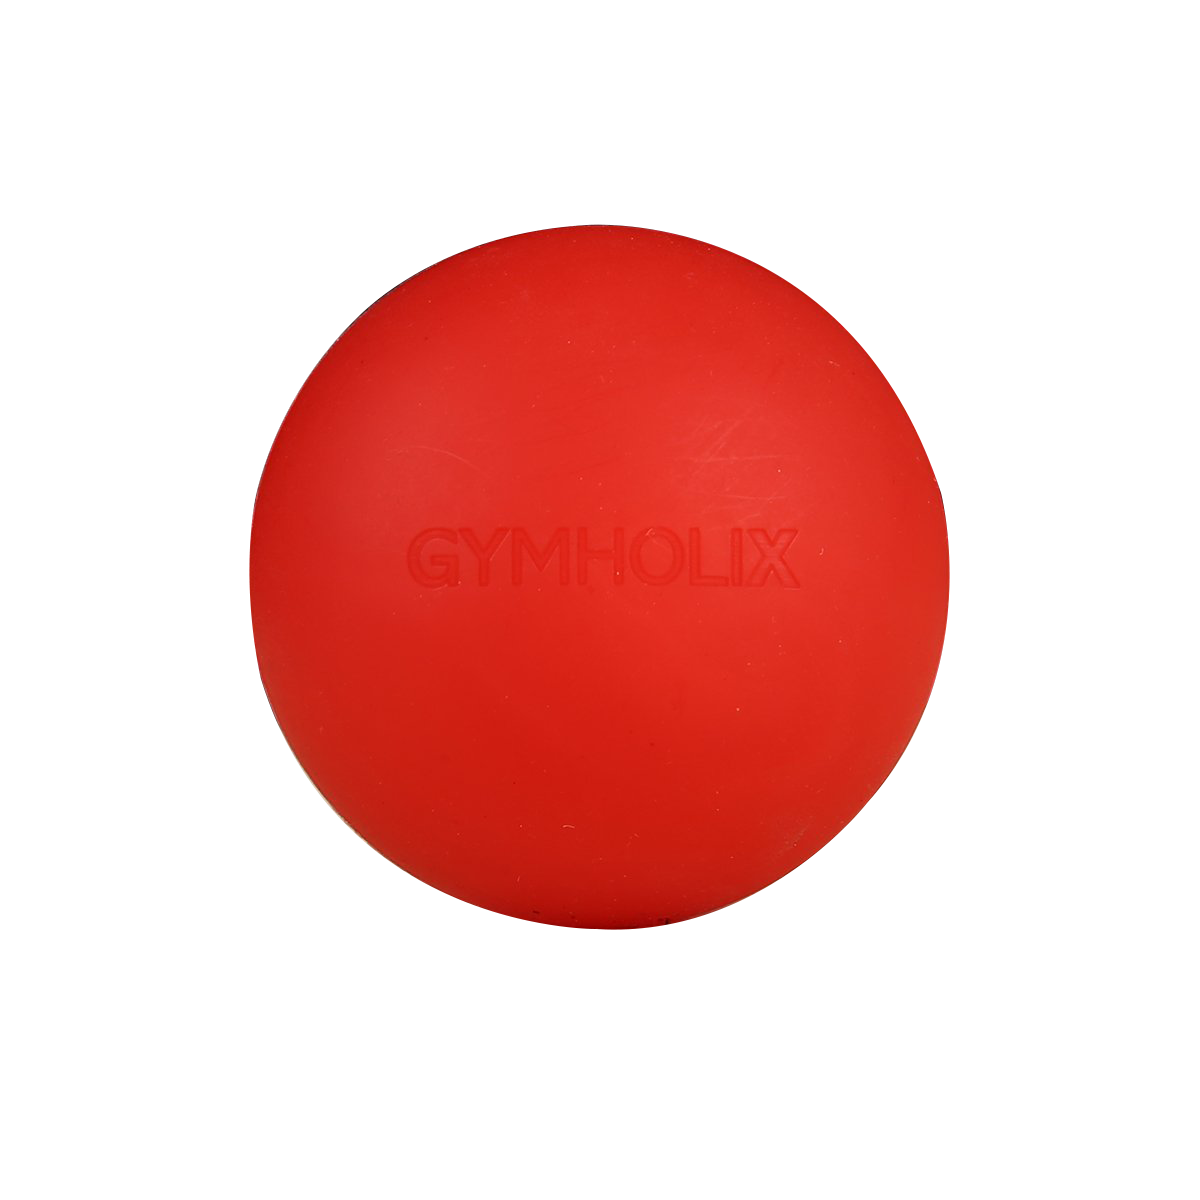 Gymholix Lacrosse Topu ( Masaj Topu ) Ball